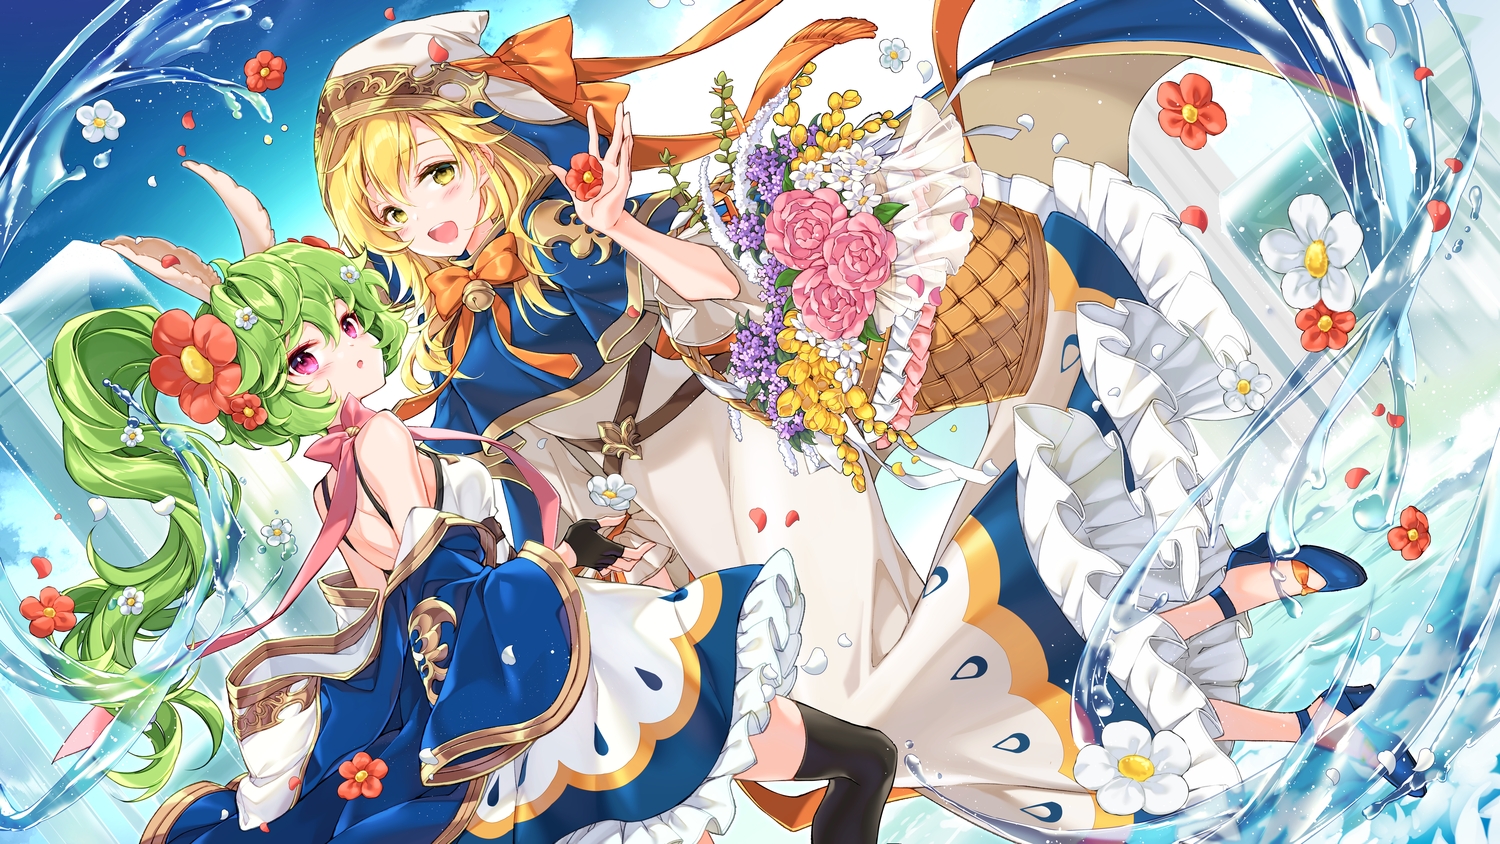 Anime Anime Girls Long Hair Flower In Hair Looking At Viewer Blushing Flowers Petals Dress Water Hee 1500x844